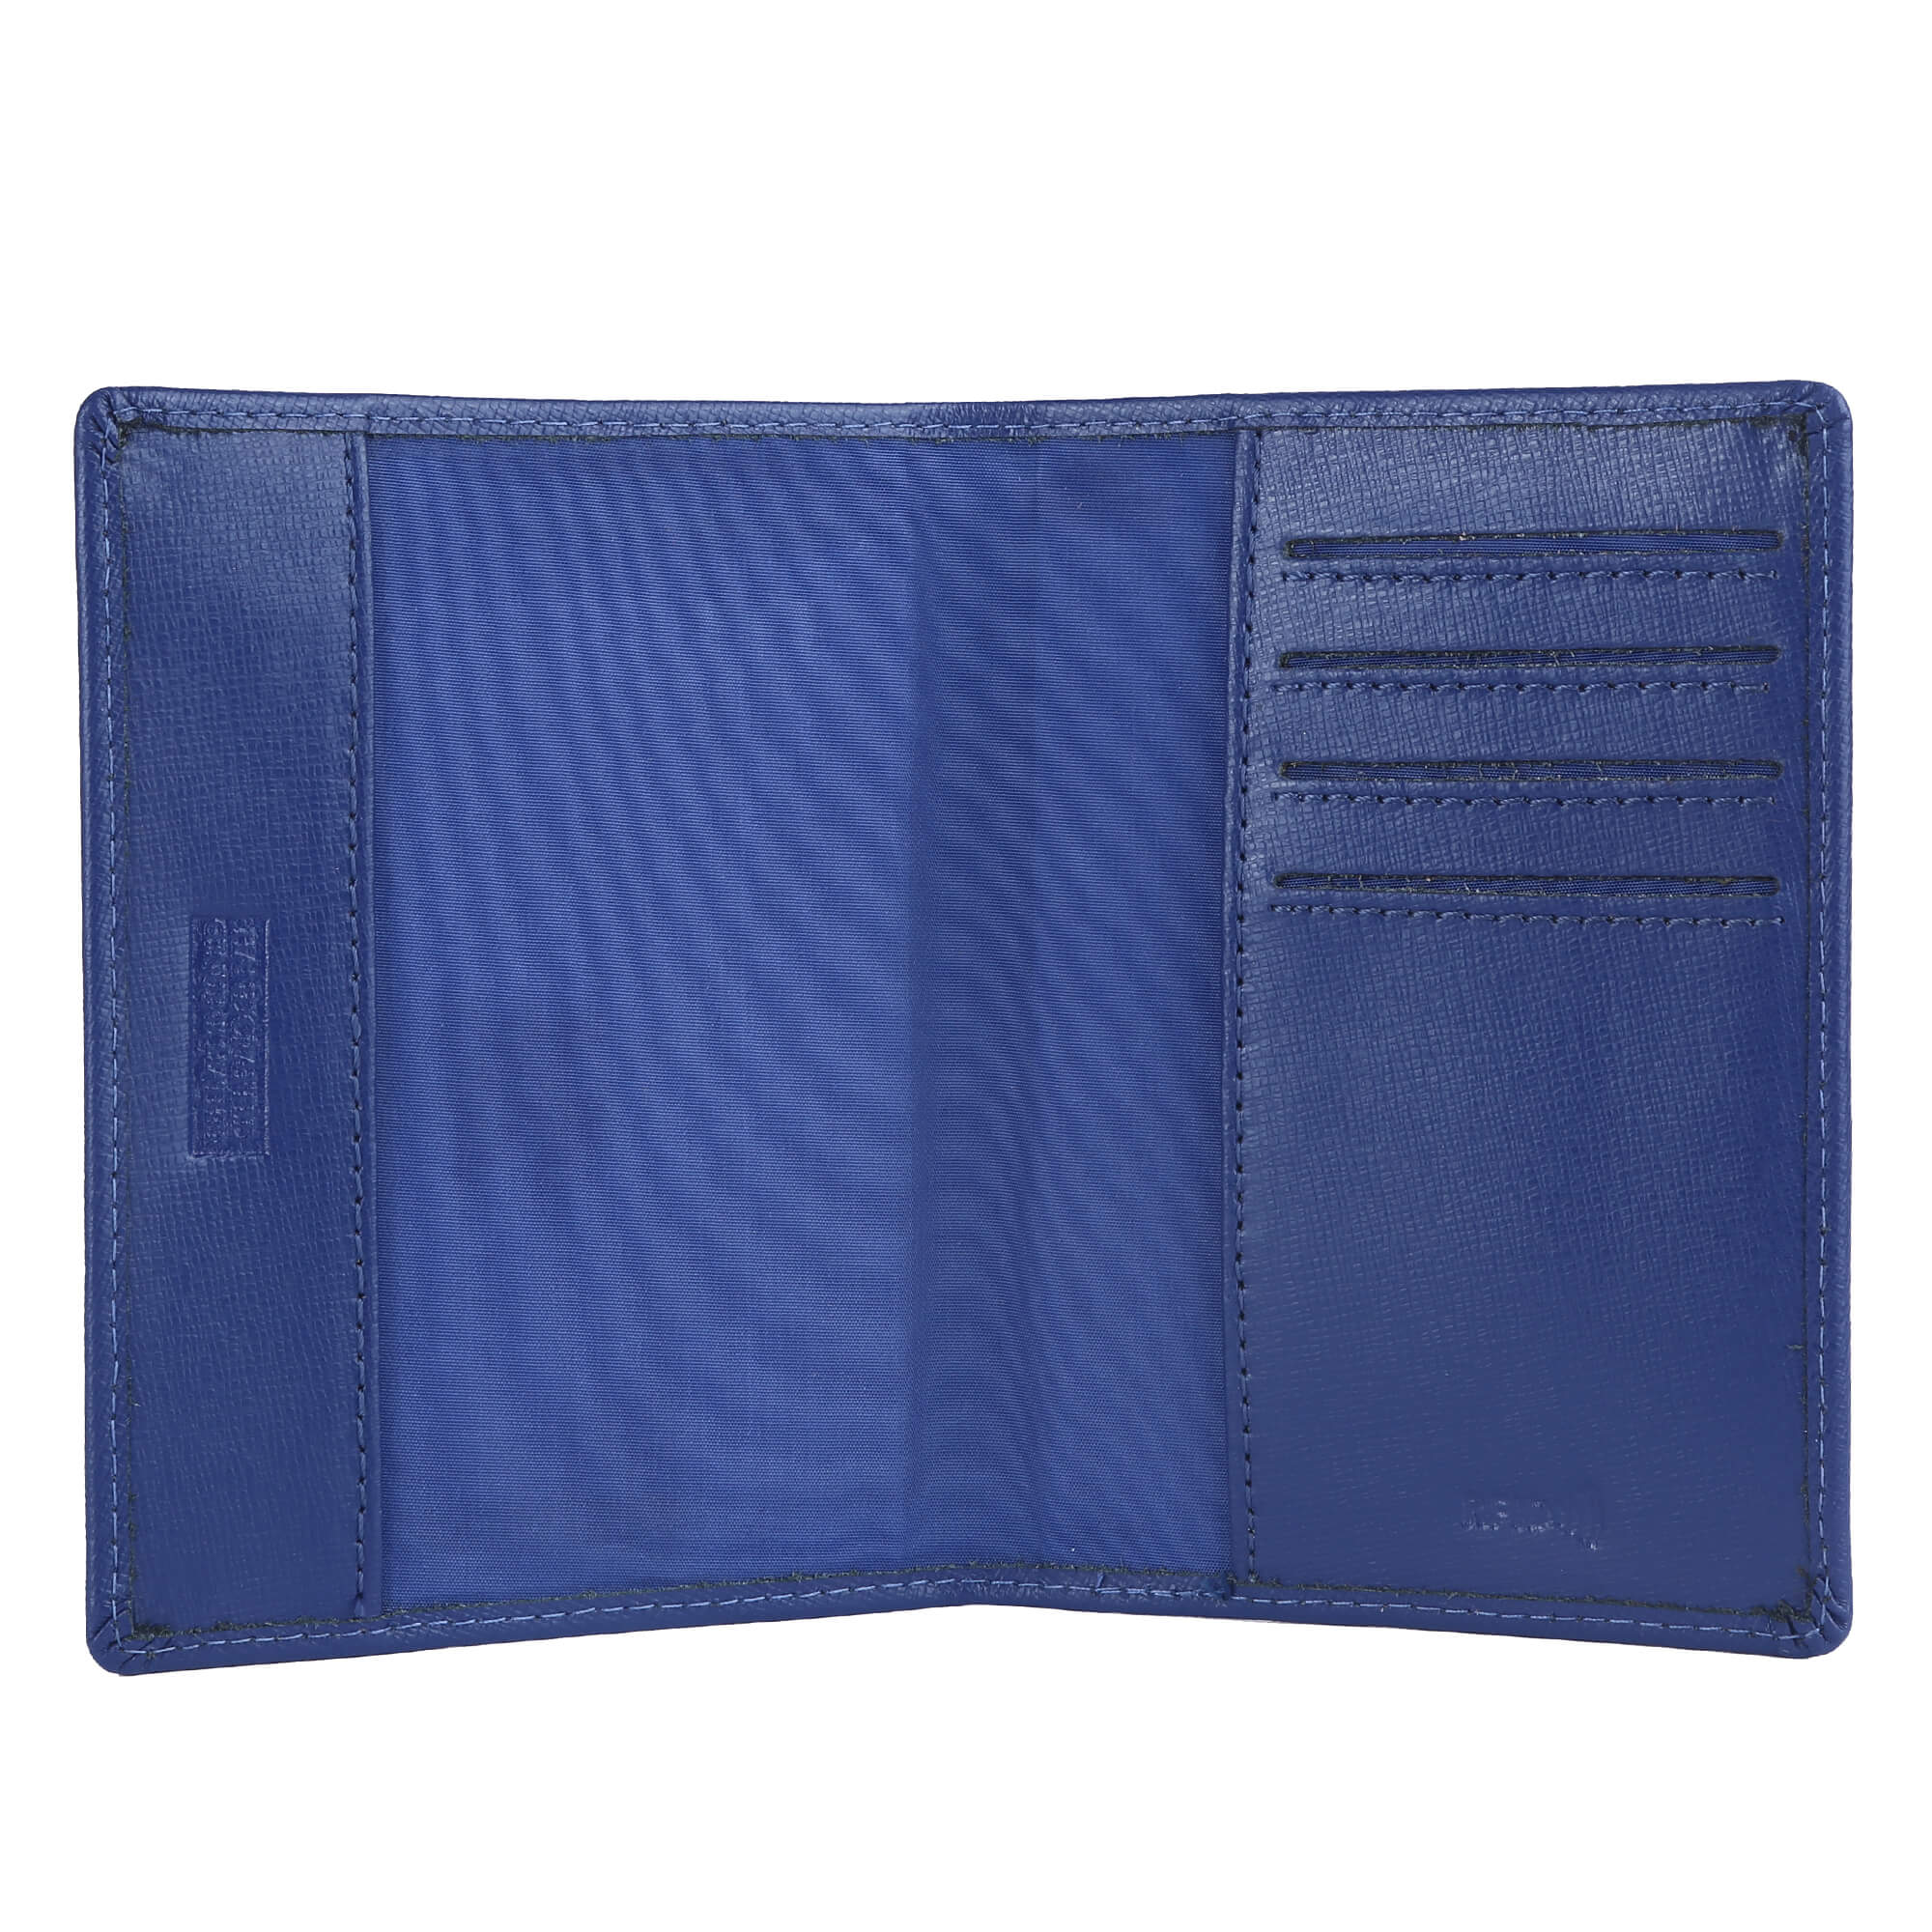 RFID Protected Slim Passport Holder - Navy Blue - Massi Miliano